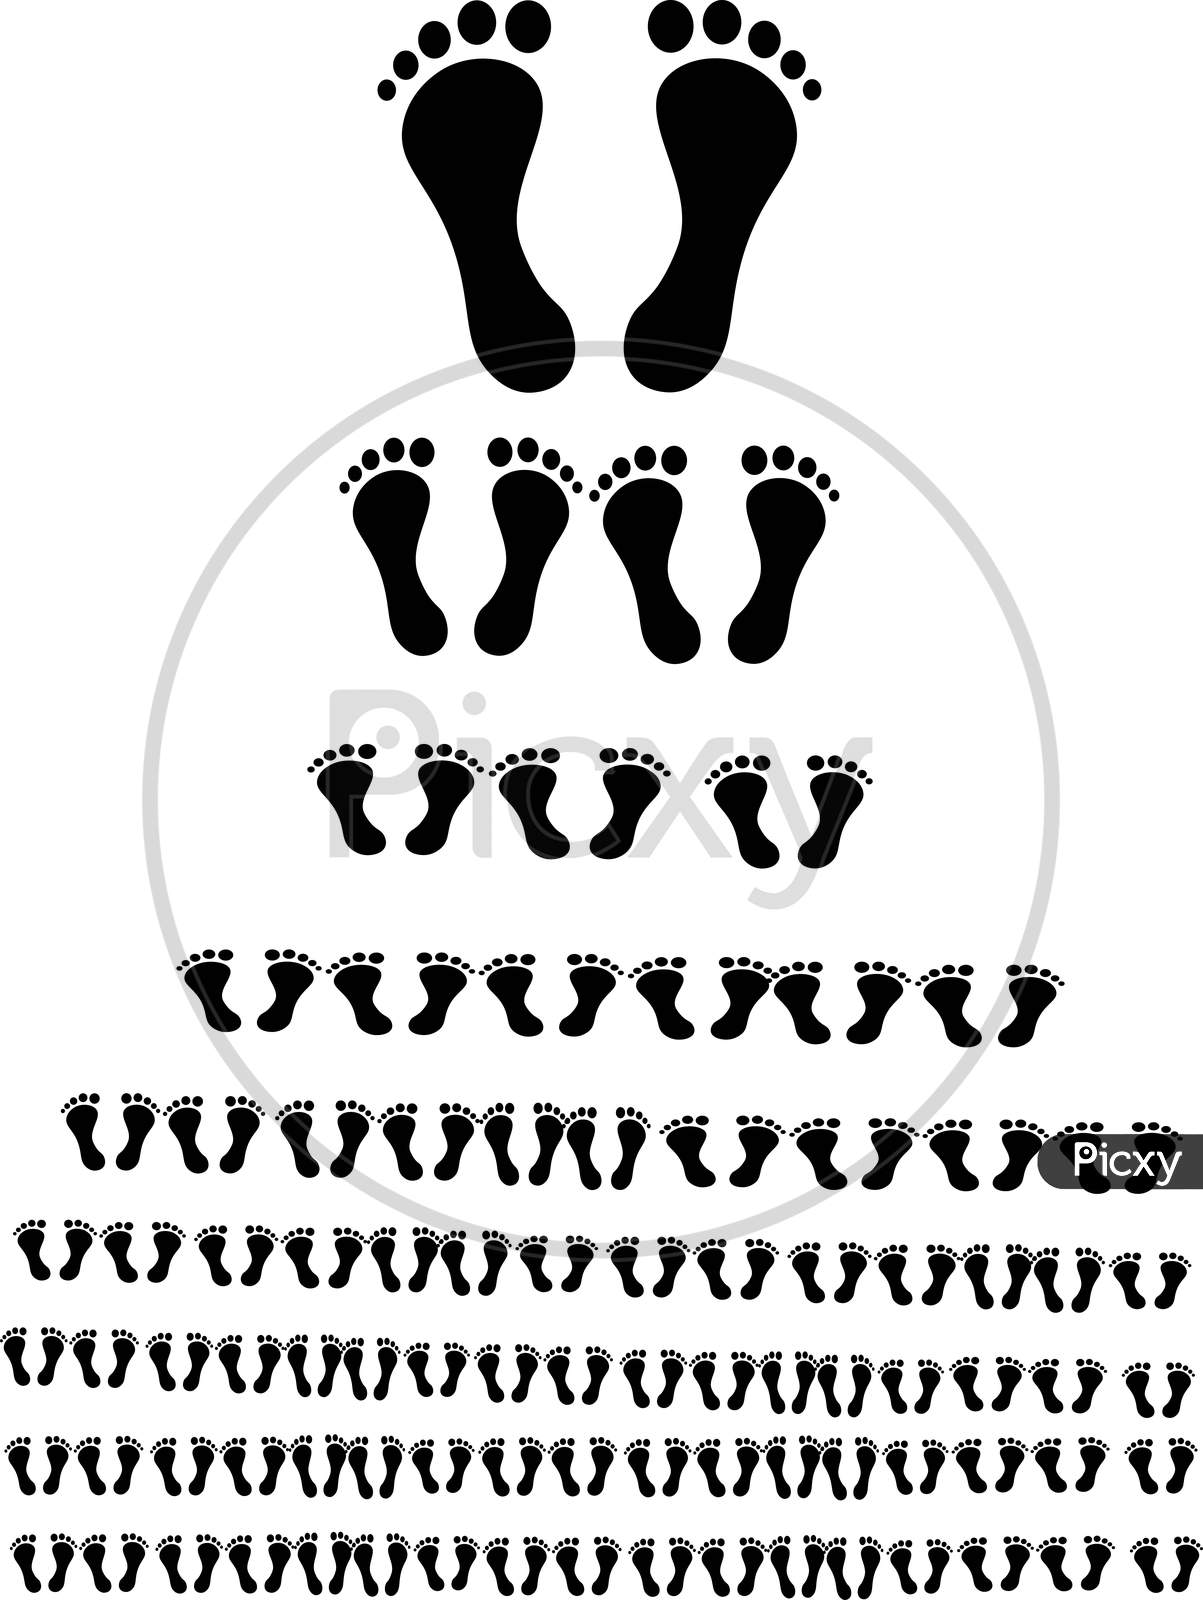 foot prints or foot pathway of family members